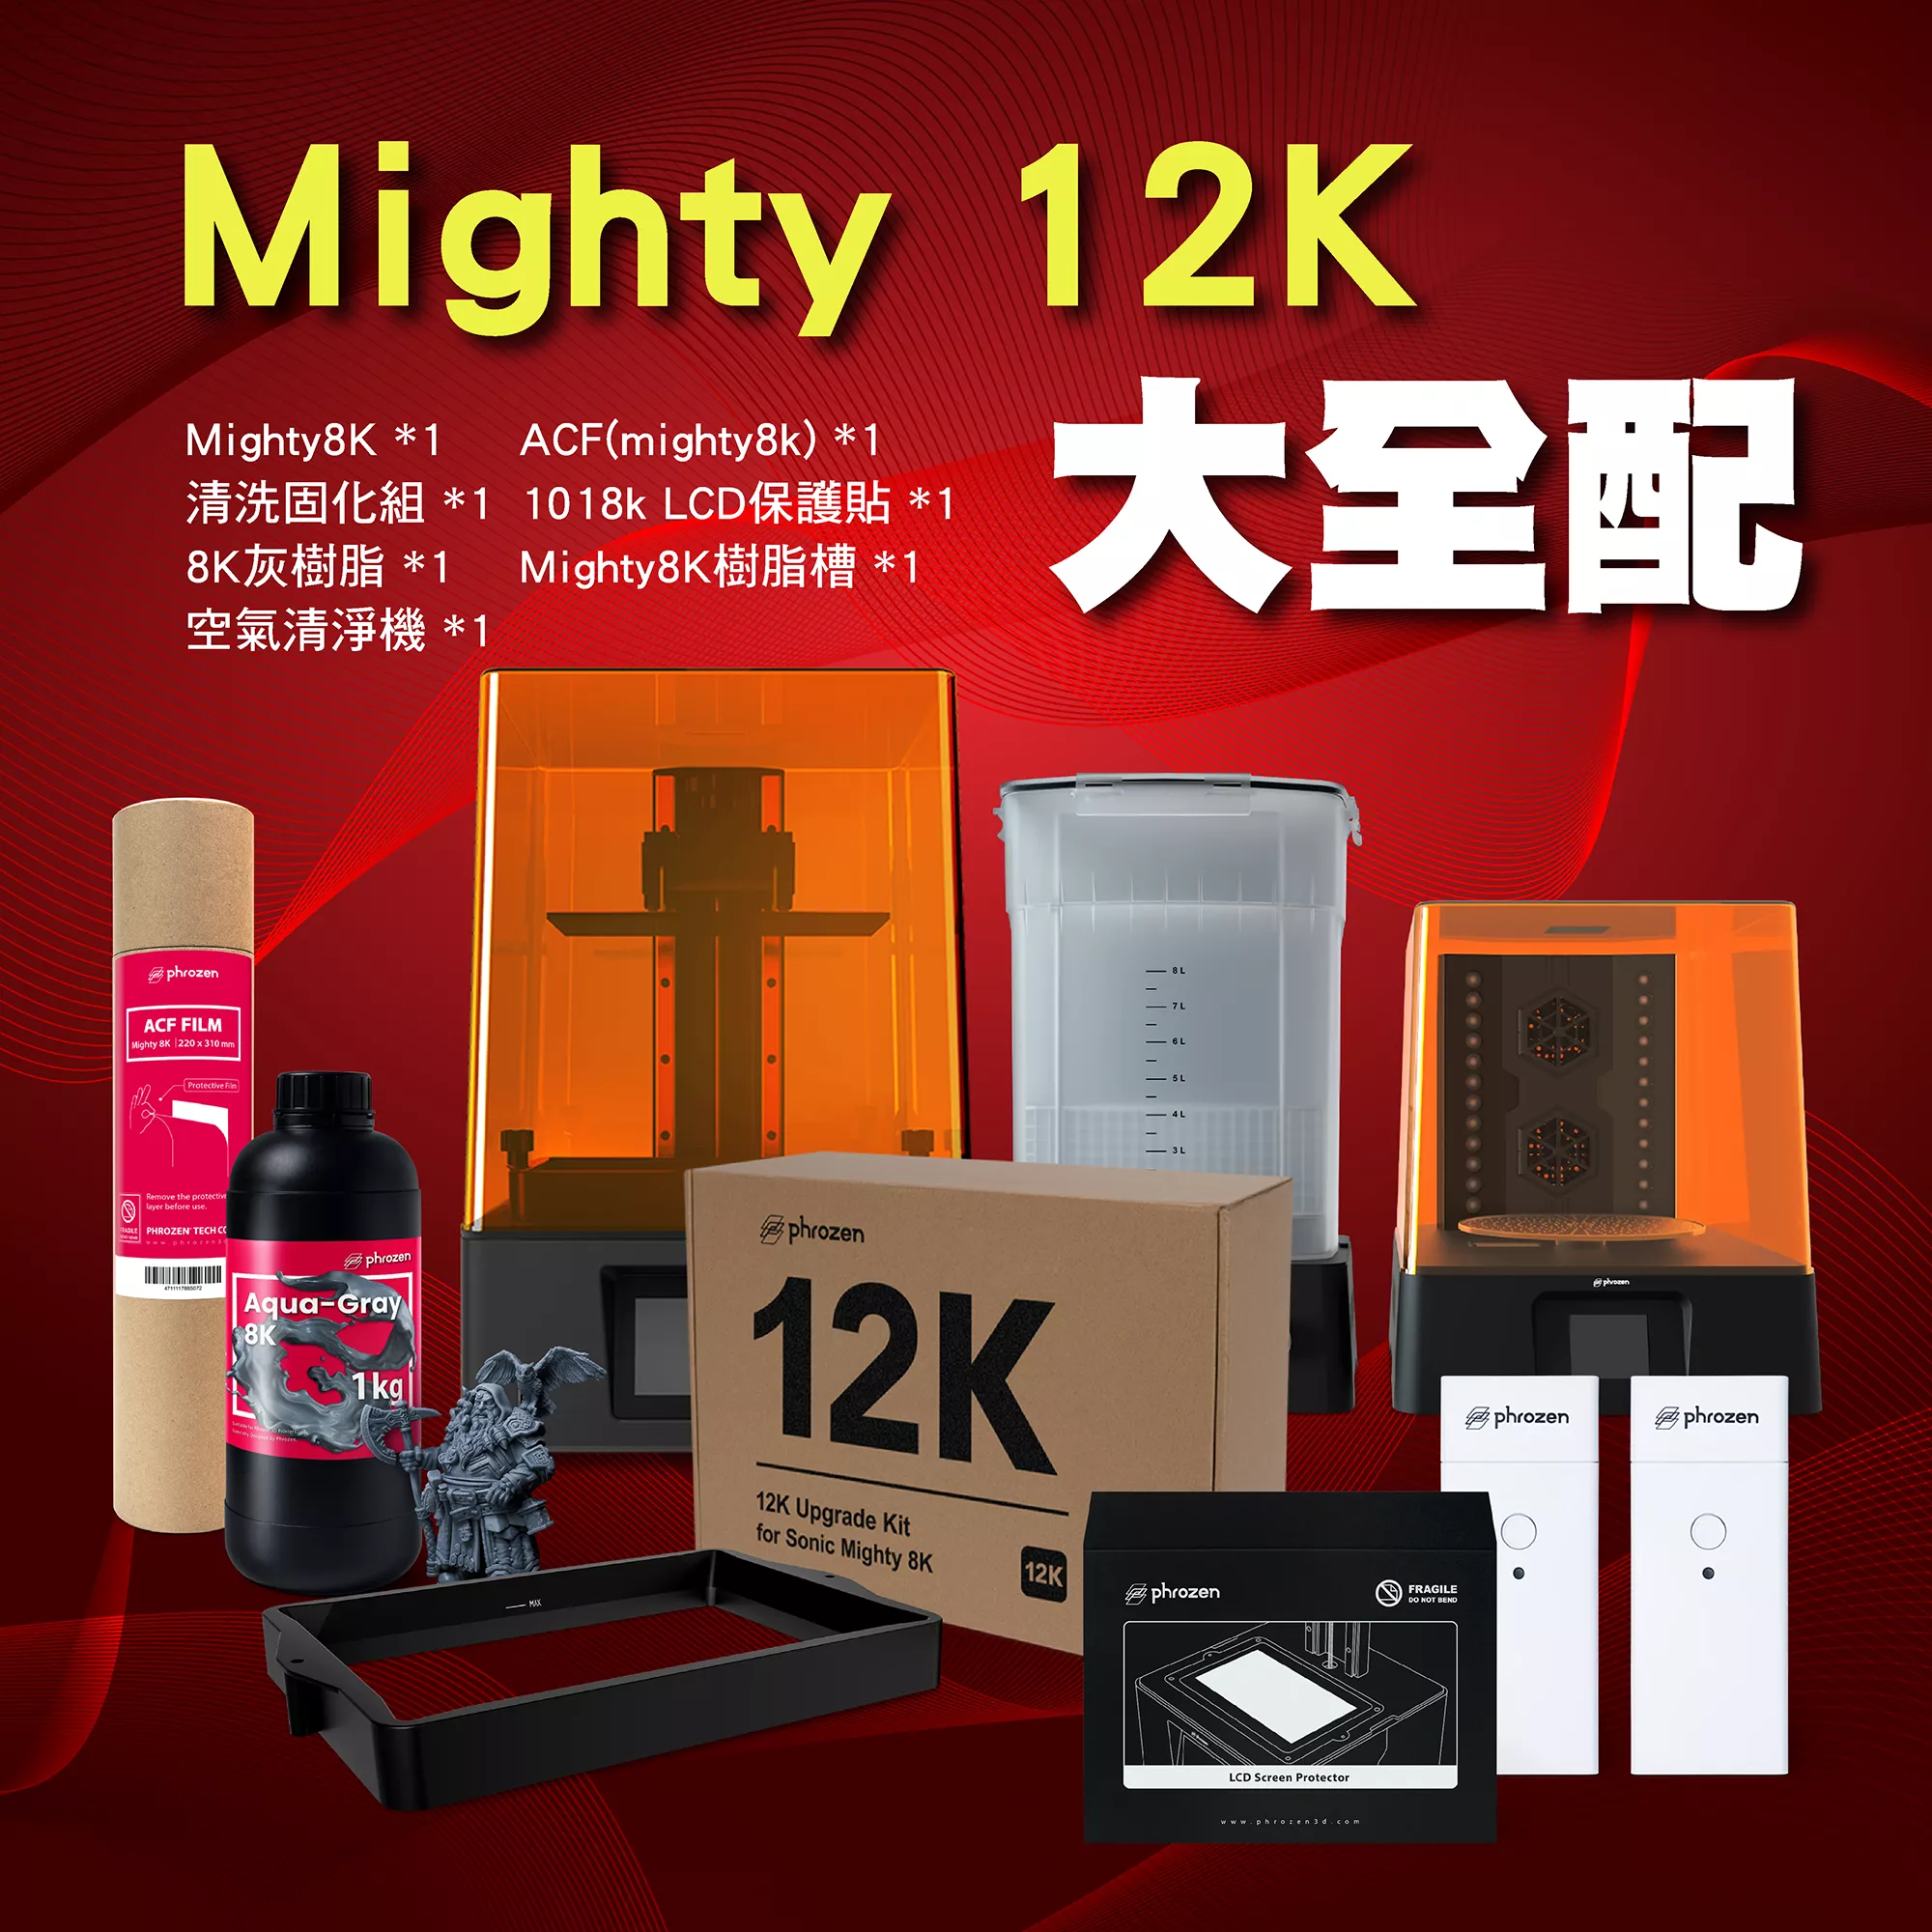 Mighty12K大全配|Mighty8K+12k升級套件+清固機+8k樹脂+空氣清淨機+ACF(mighty)+1018K保護貼+樹脂槽